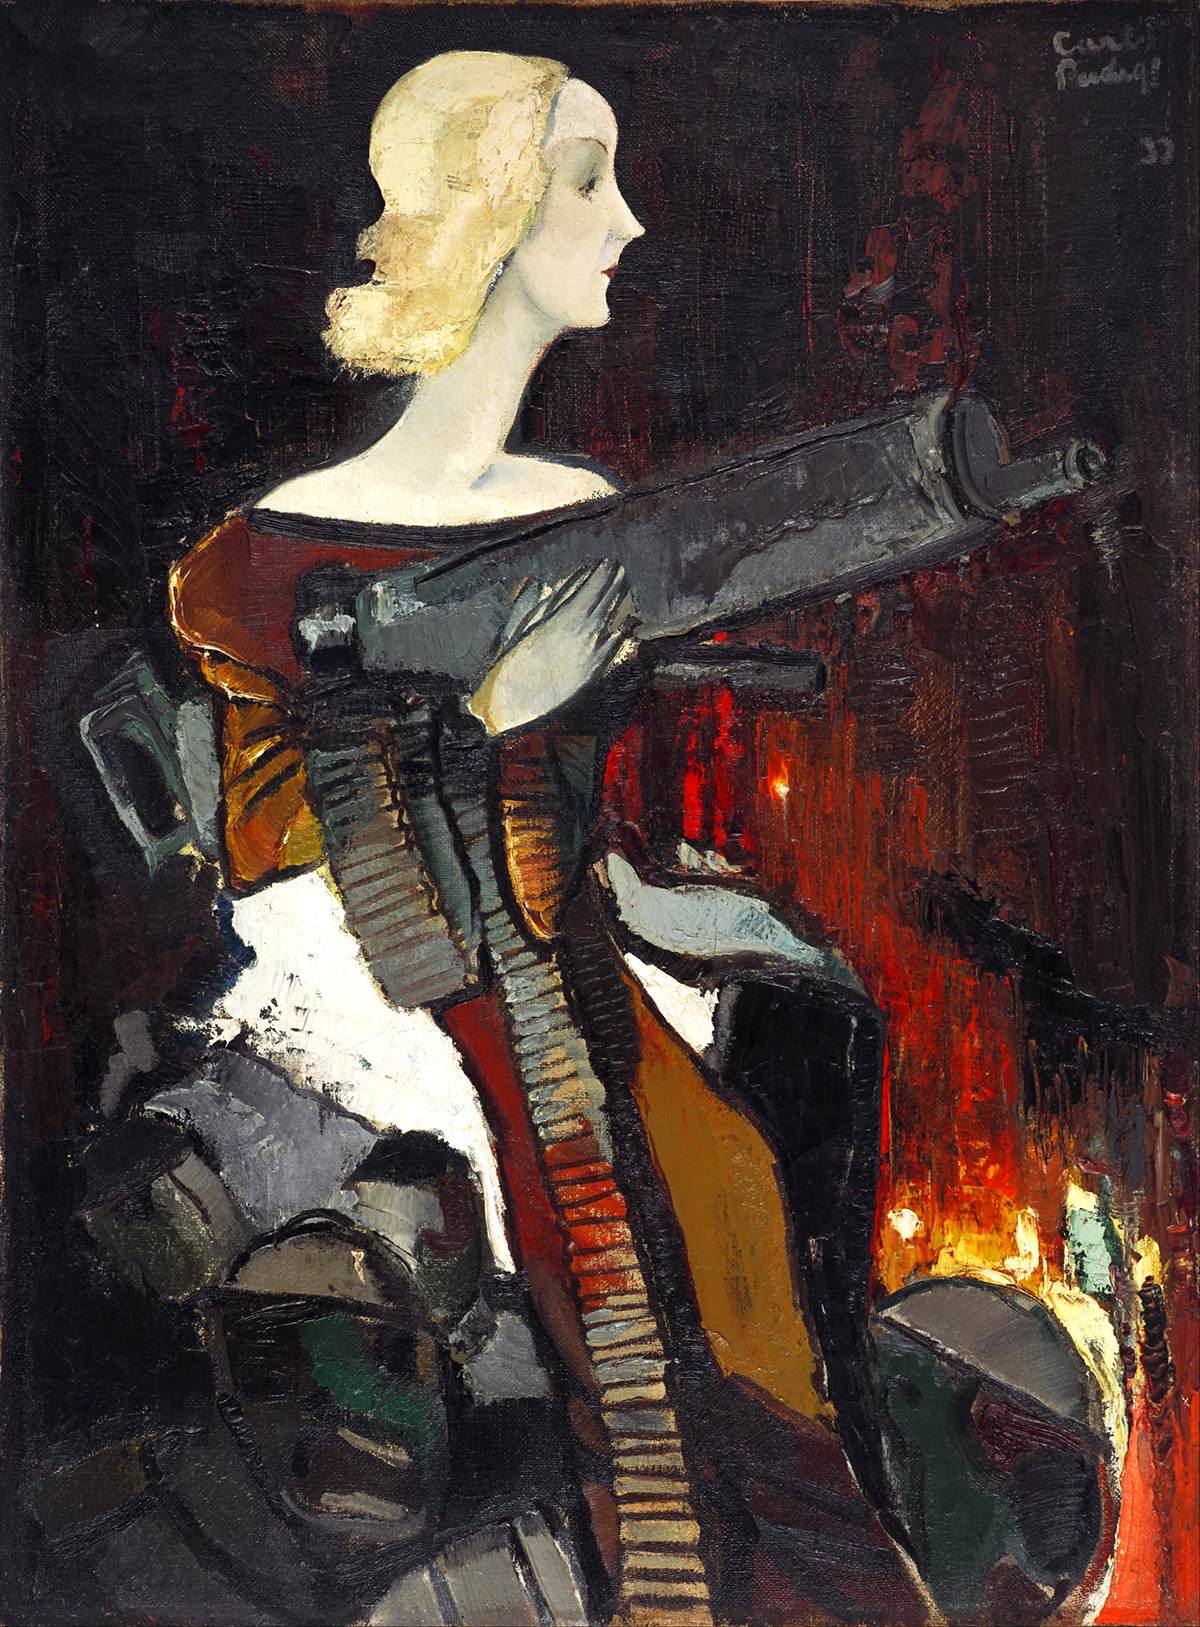 madonna with a machinegun